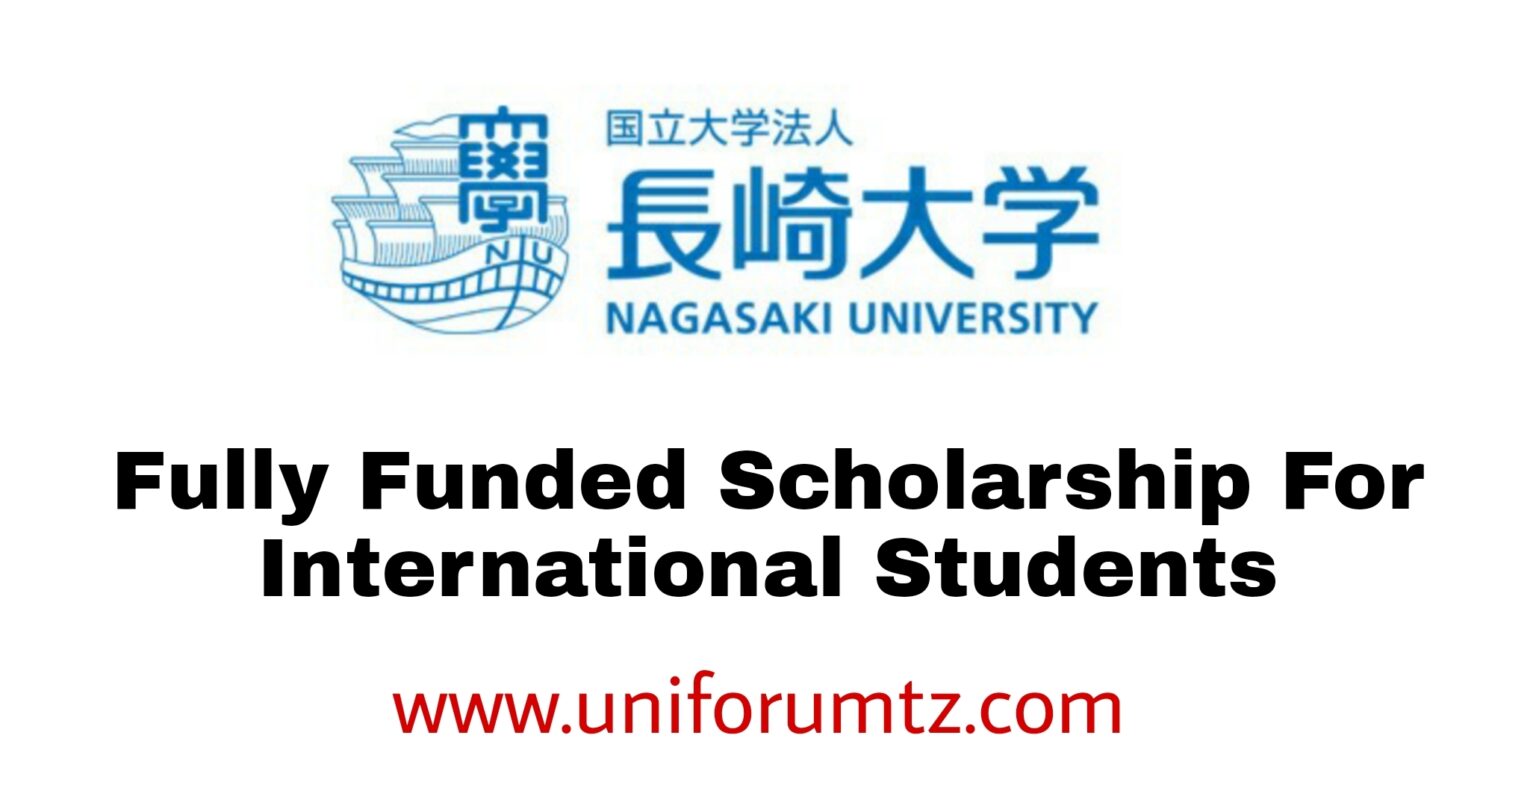 Nagasaki University Scholarship 2022 For International Students In Japan (Fully Funded)